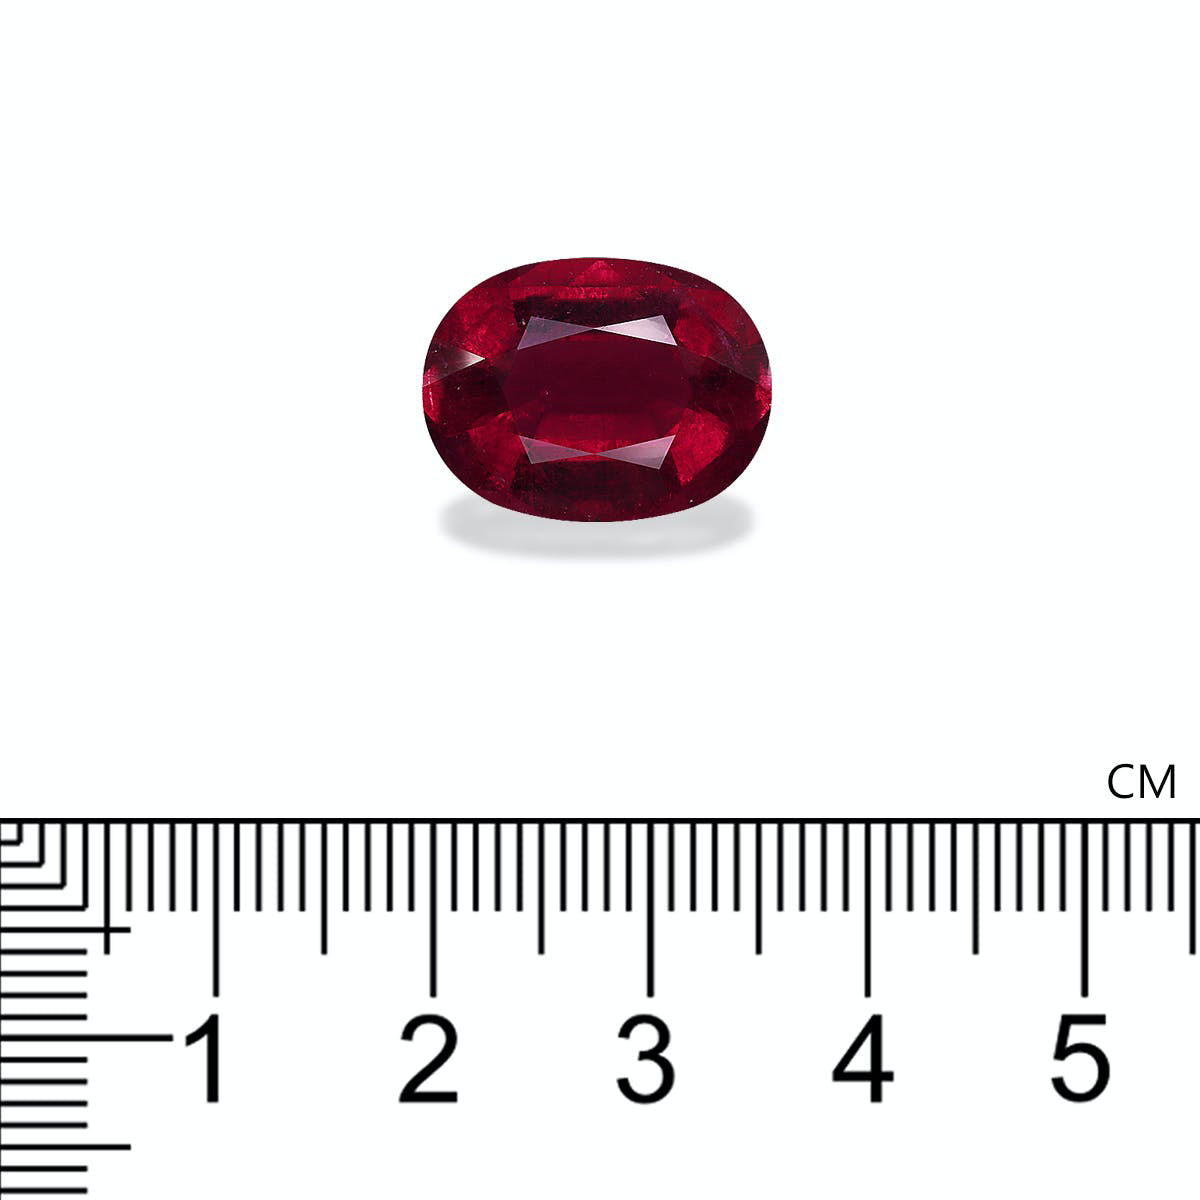 Picture of Vivid Red Rubellite Tourmaline 8.47ct (RL0481)